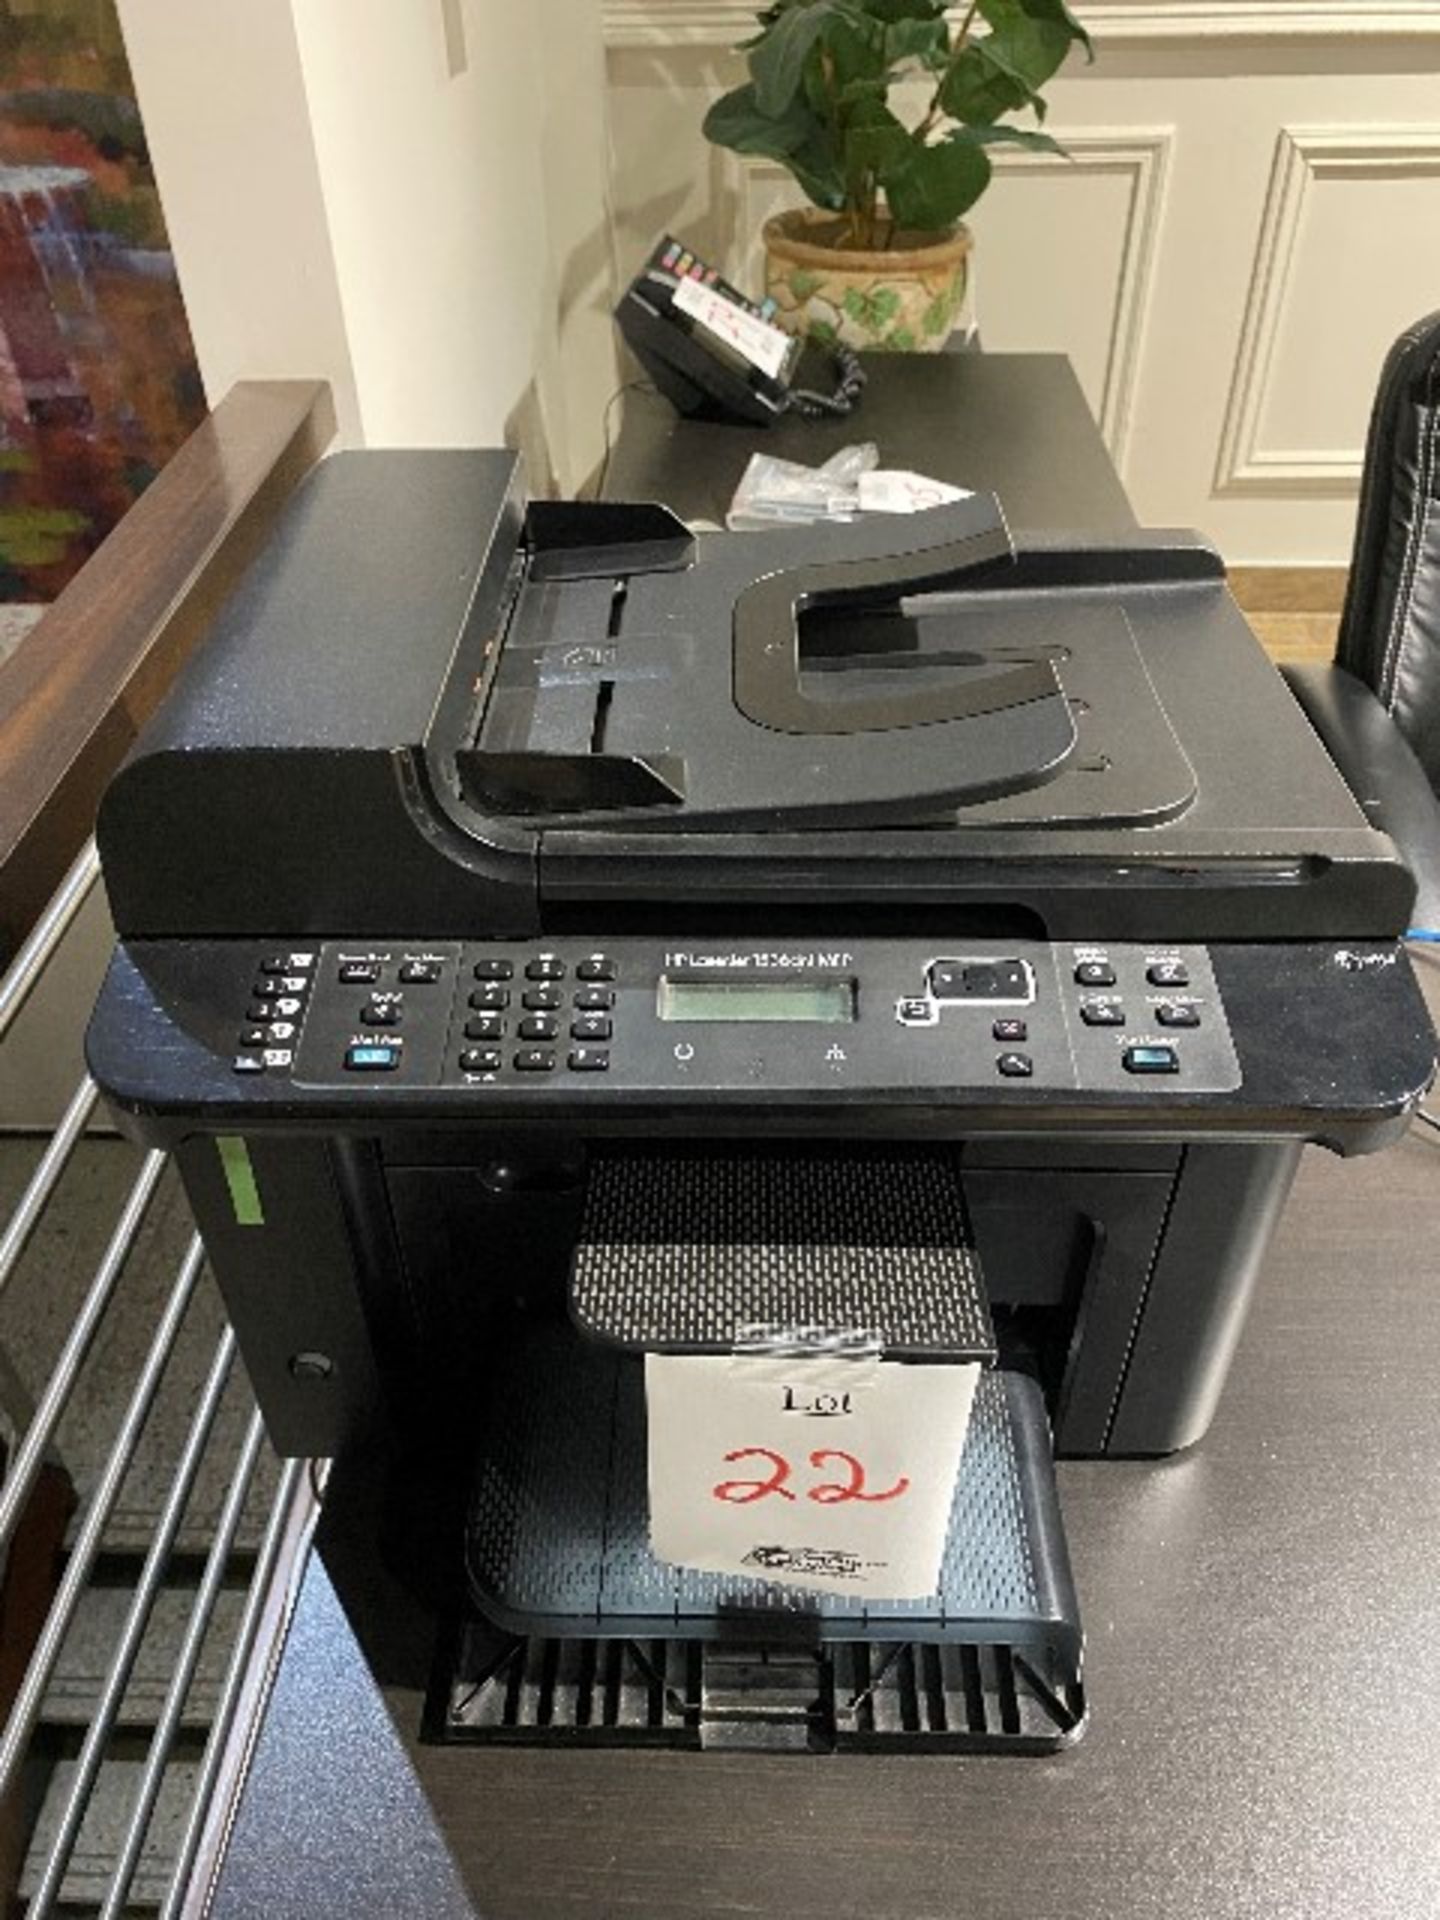 HP LaserJet 1536dnf multi function printer